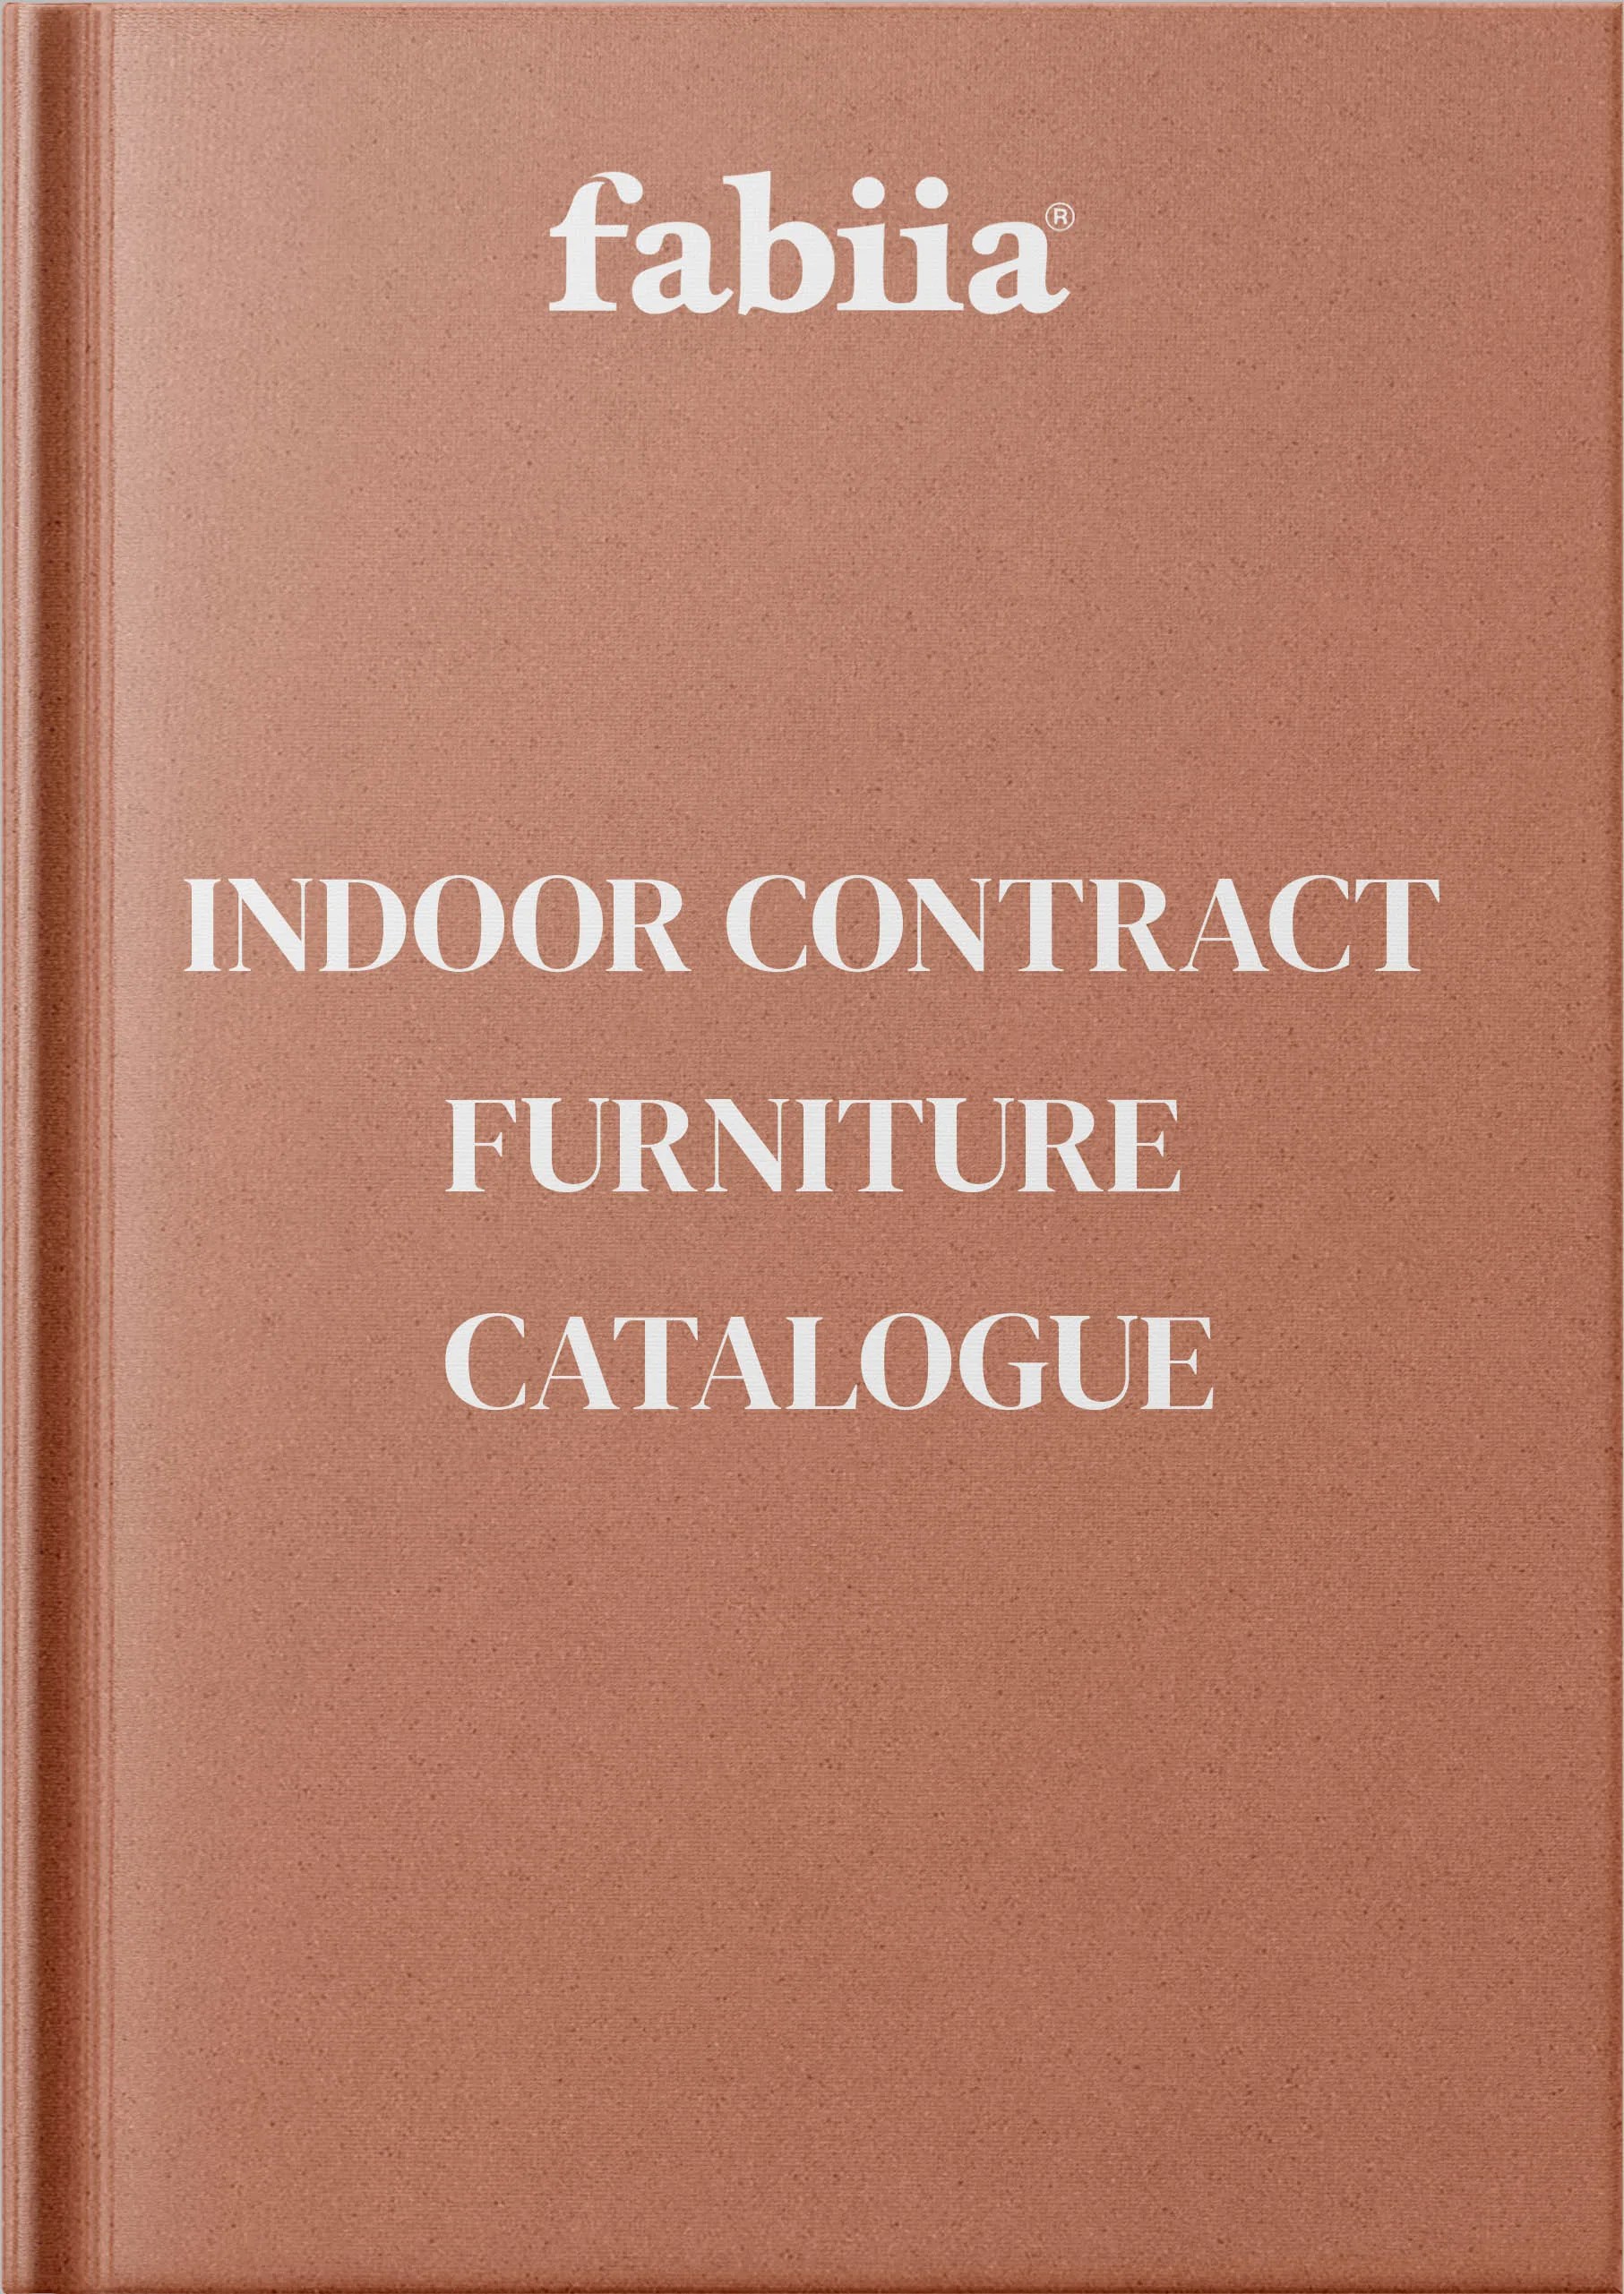 Explore the Fabiia indoor contract furniture catalogue